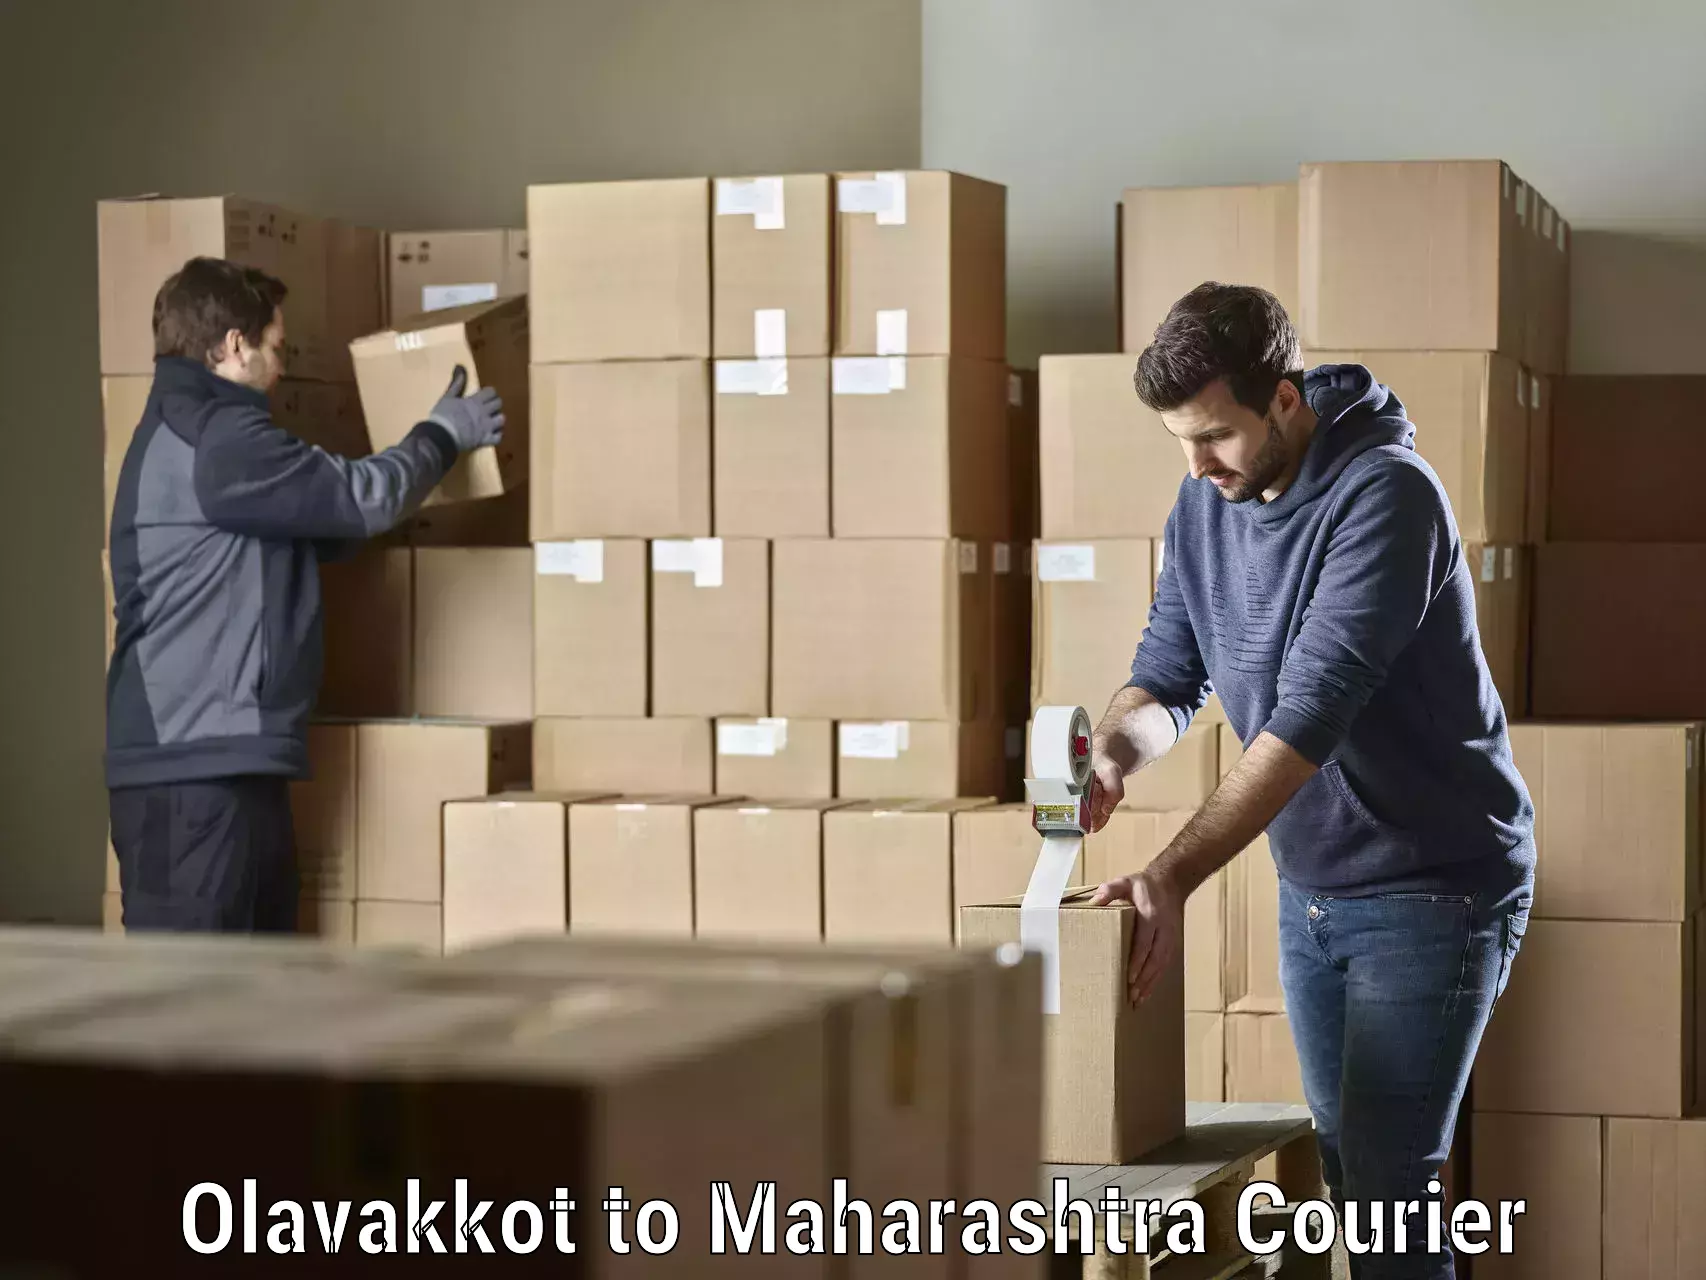 Logistics service provider Olavakkot to Maharashtra